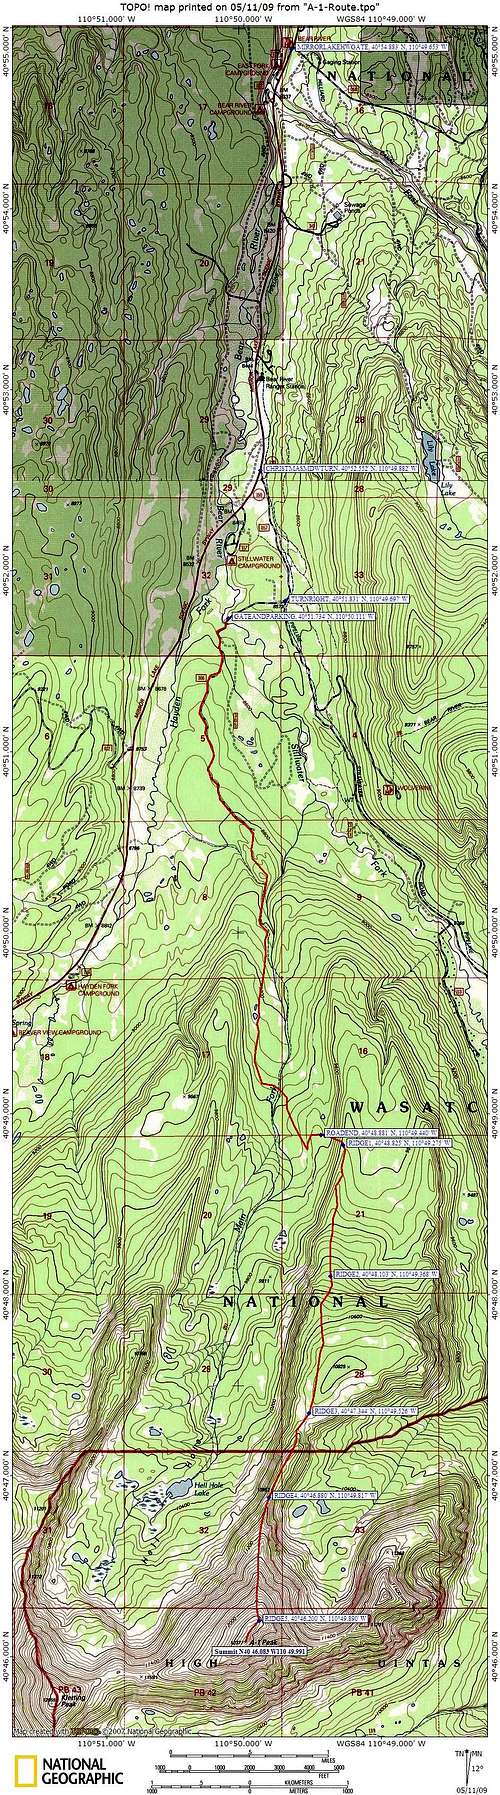 North ridge of A-1 top map